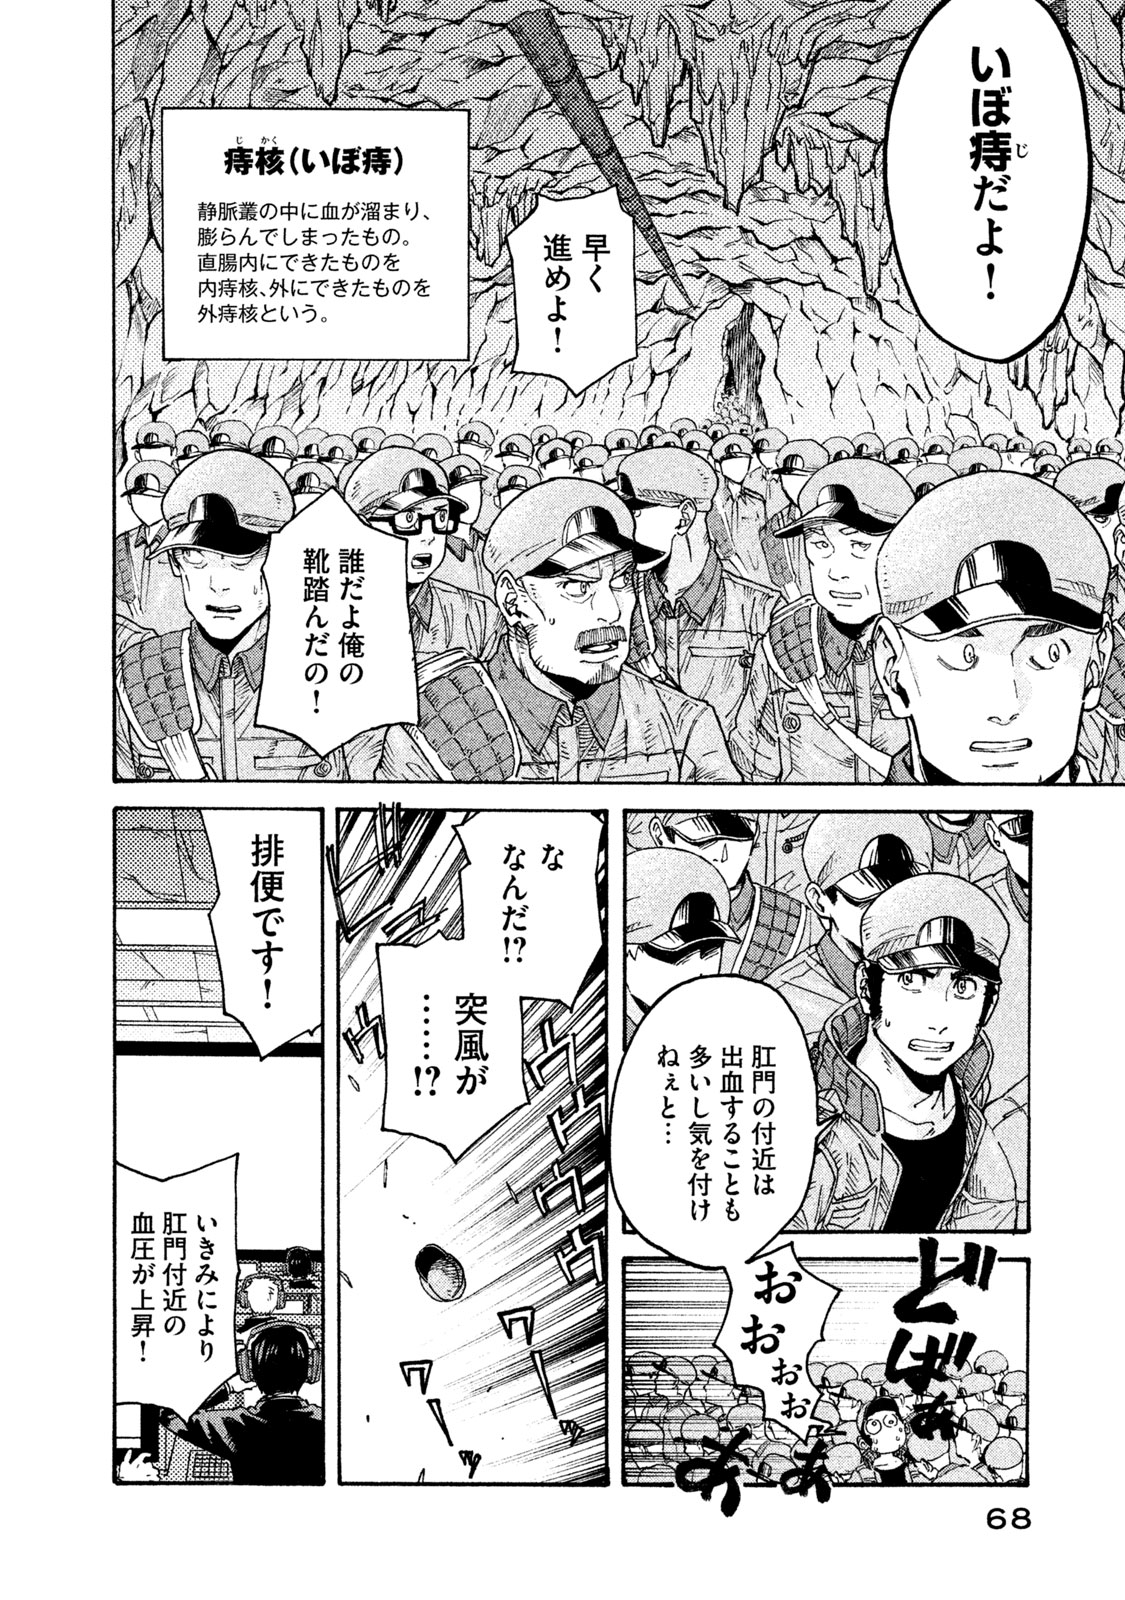 Hataraku Saibou BLACK - Chapter 21 - Page 4